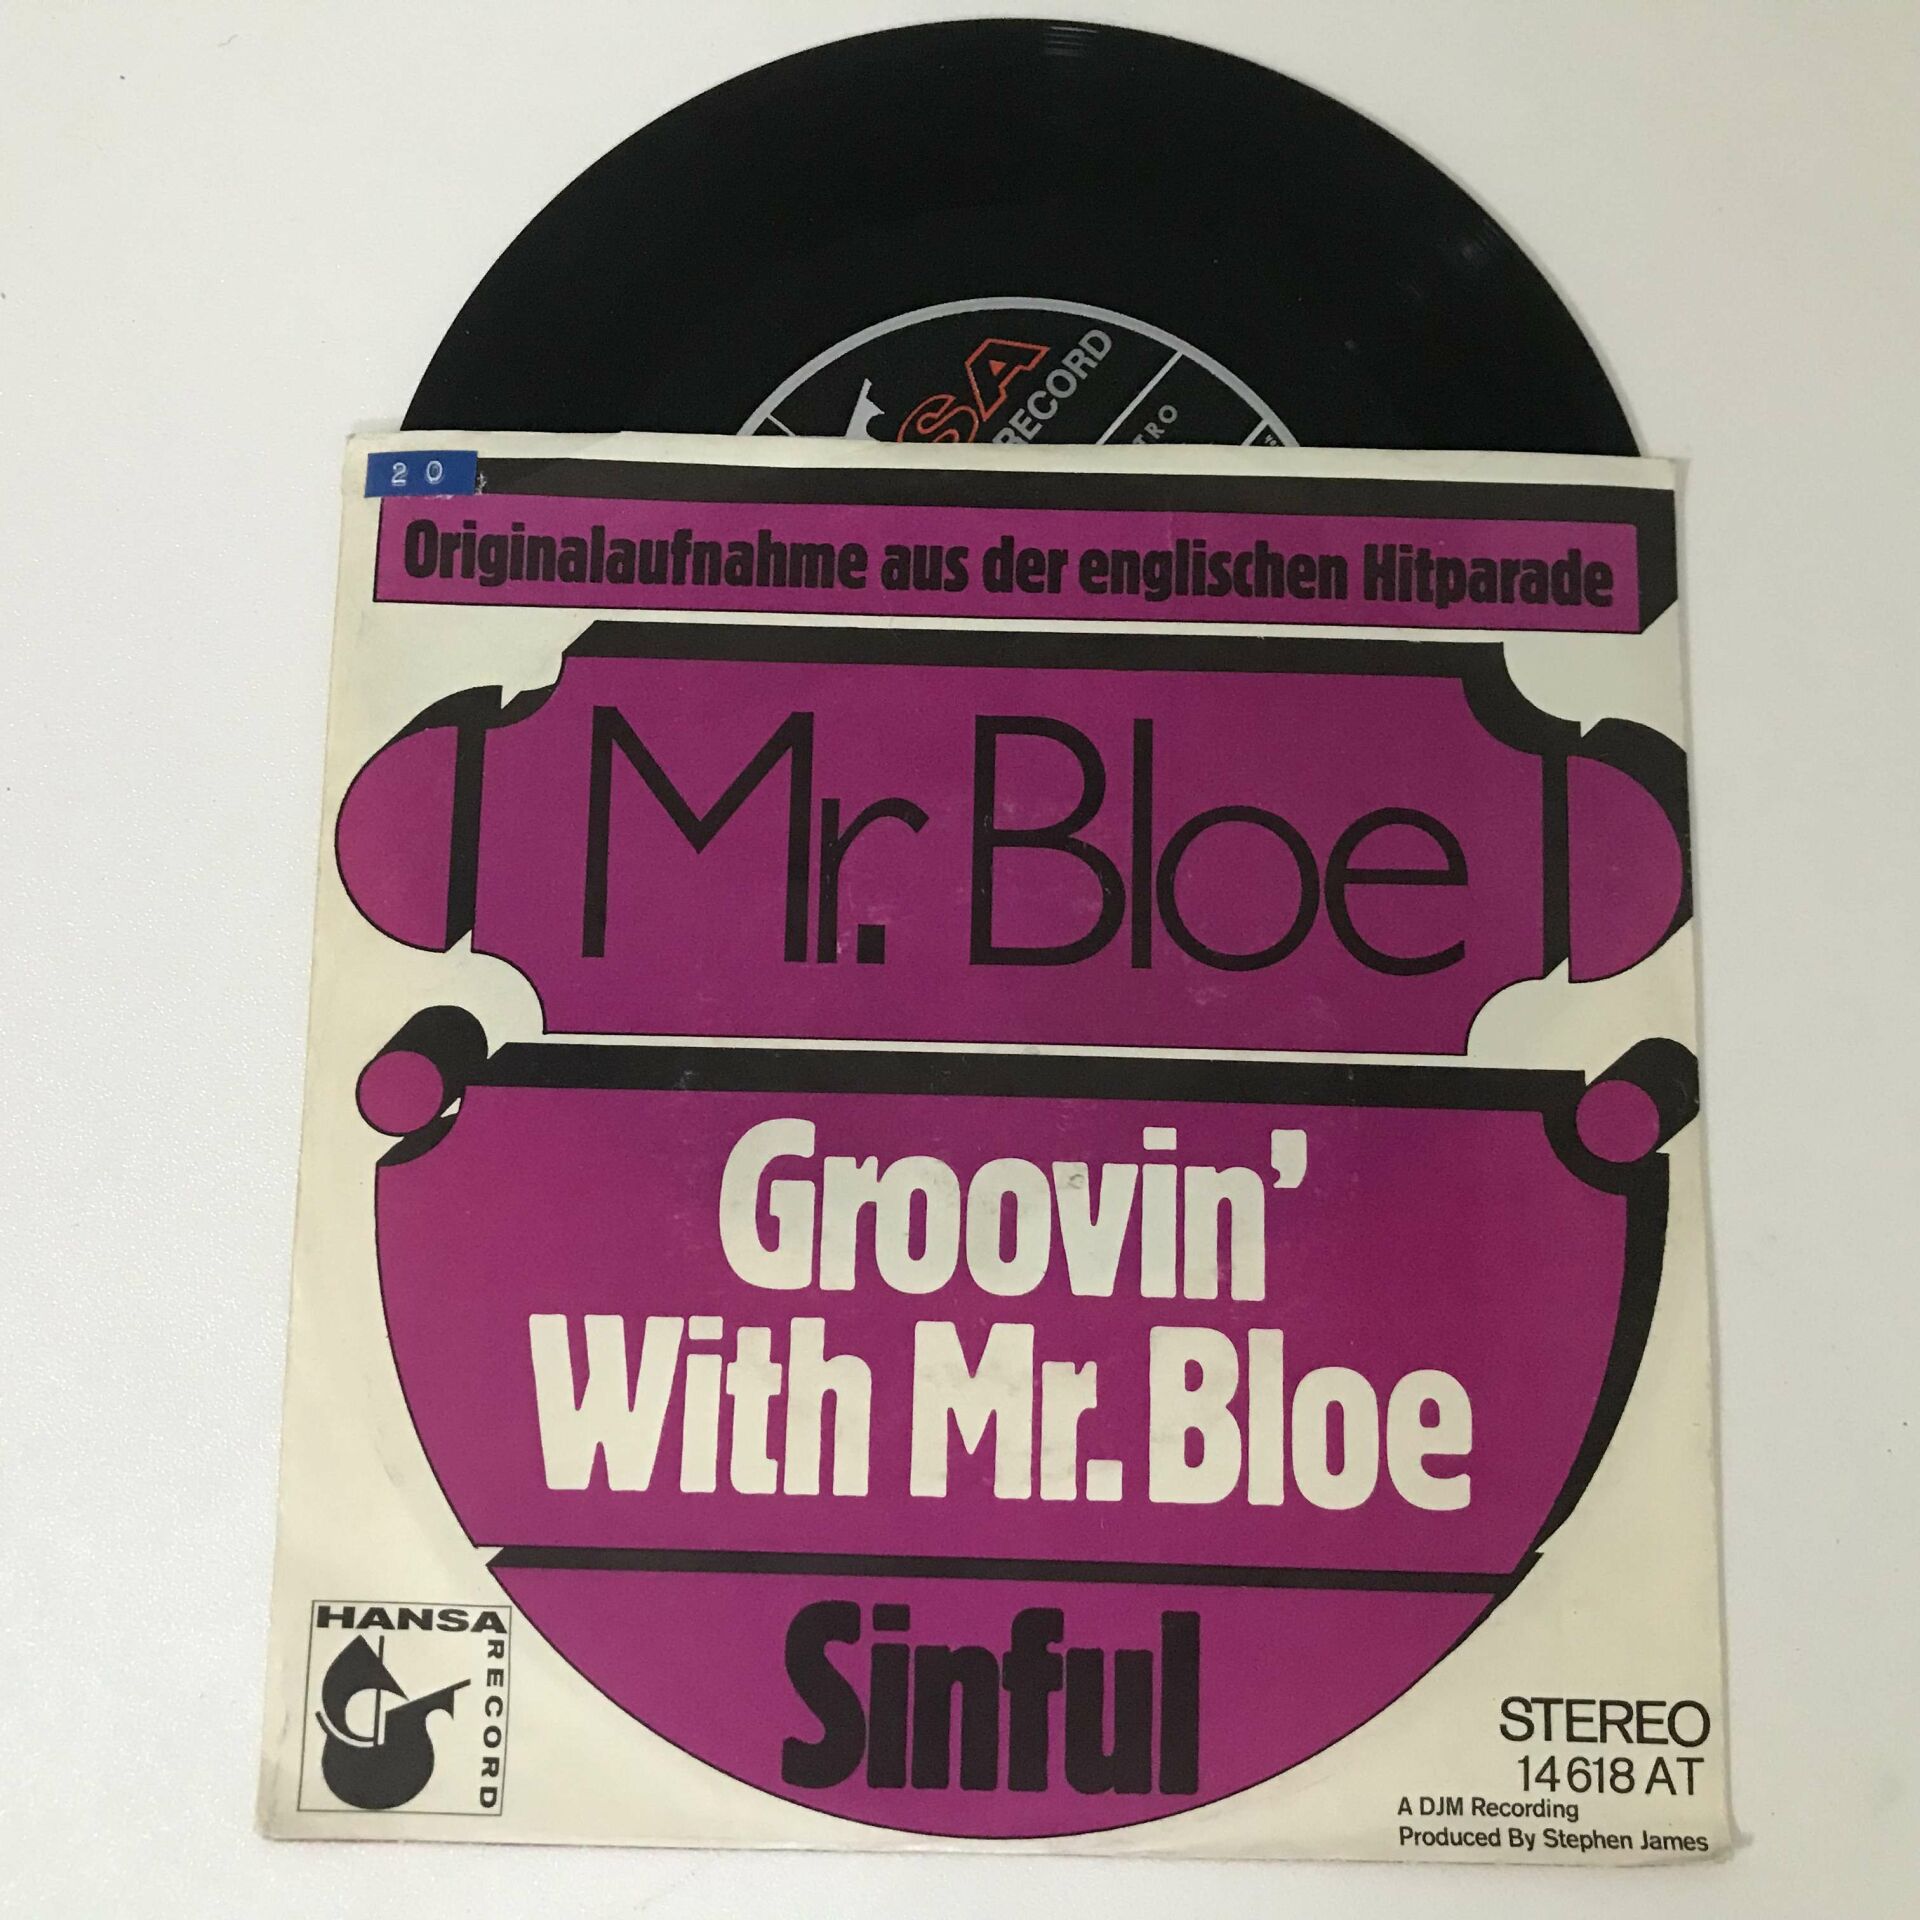 Mr. Bloe – Groovin' With Mr. Bloe